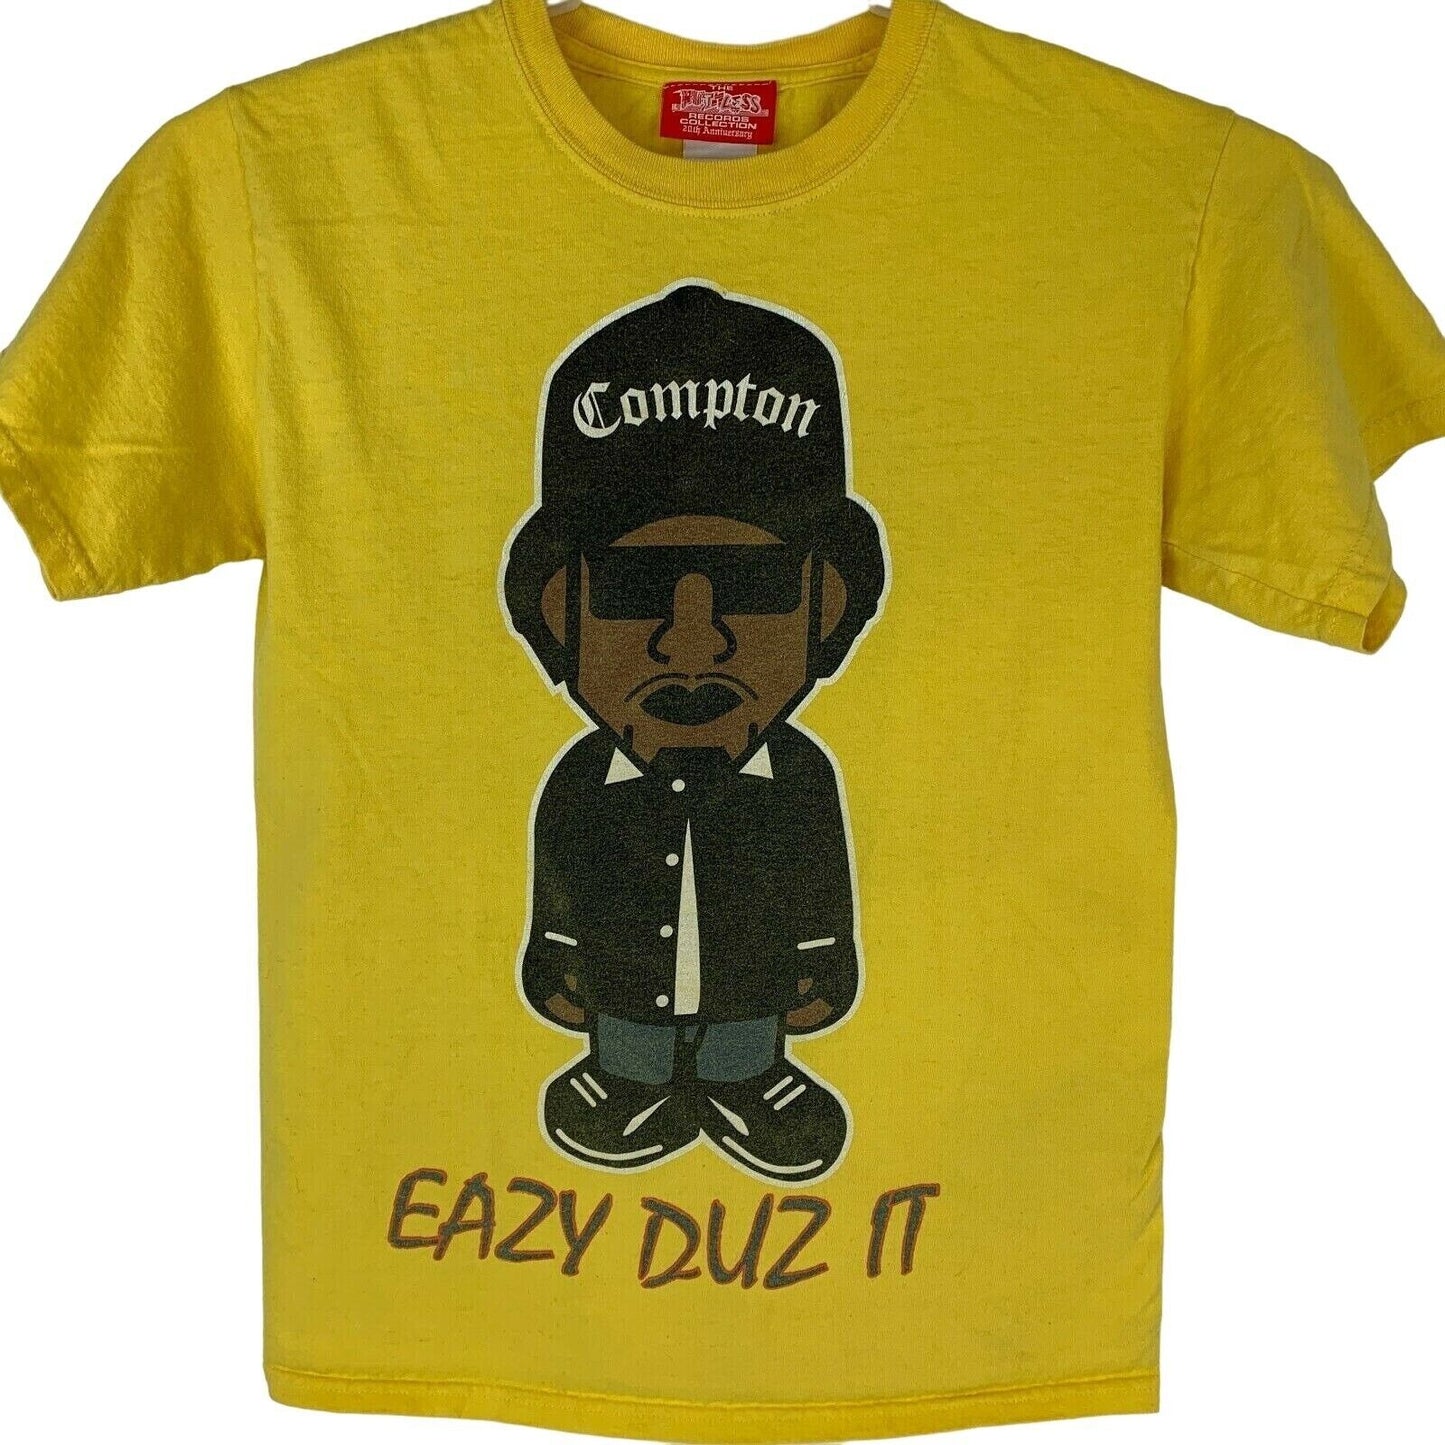 Eazy-E NWA Ruthless Records T Shirt Rap Hip Hop 20th Anniversary 2008 Tee Small